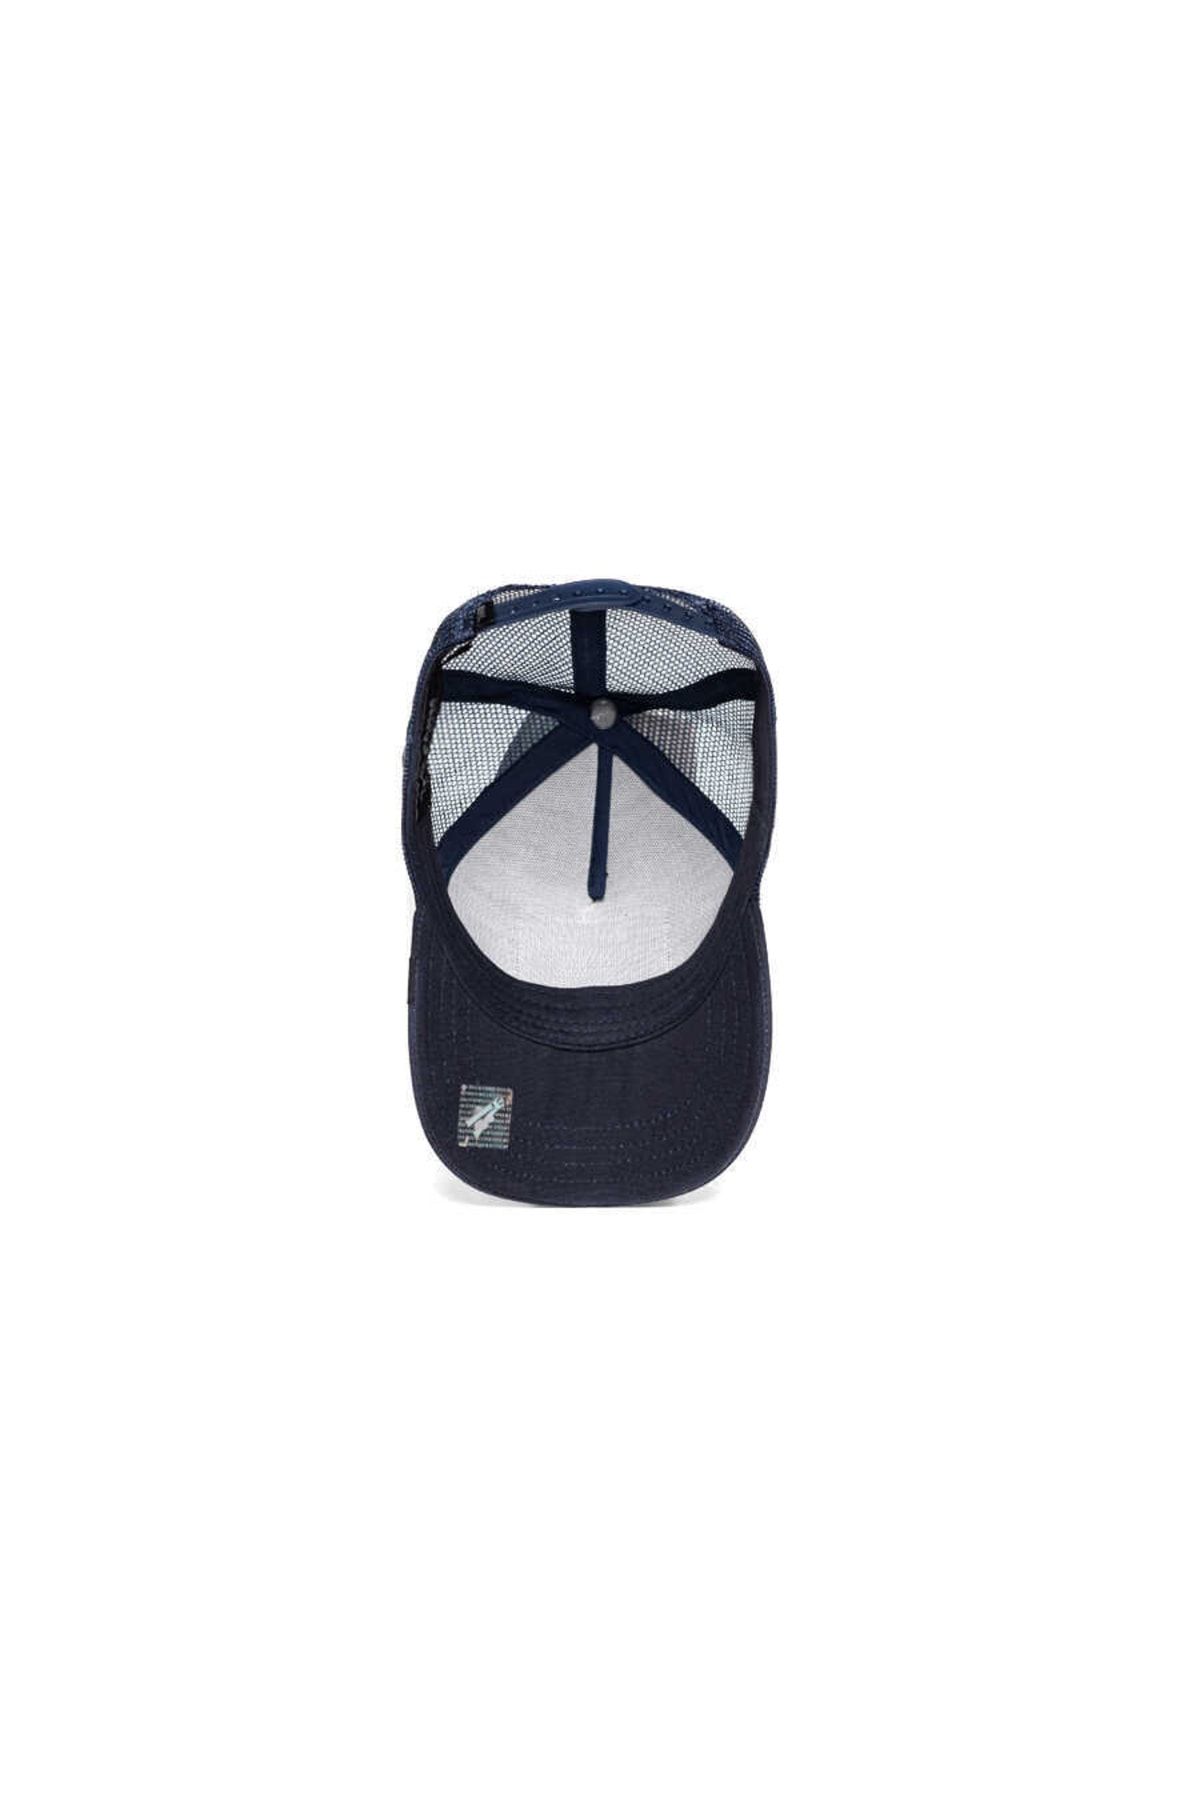 Goorin Bros کلاه زوزه کش کوچک (گرگ شکل) 201-0040 آبی استاندارد